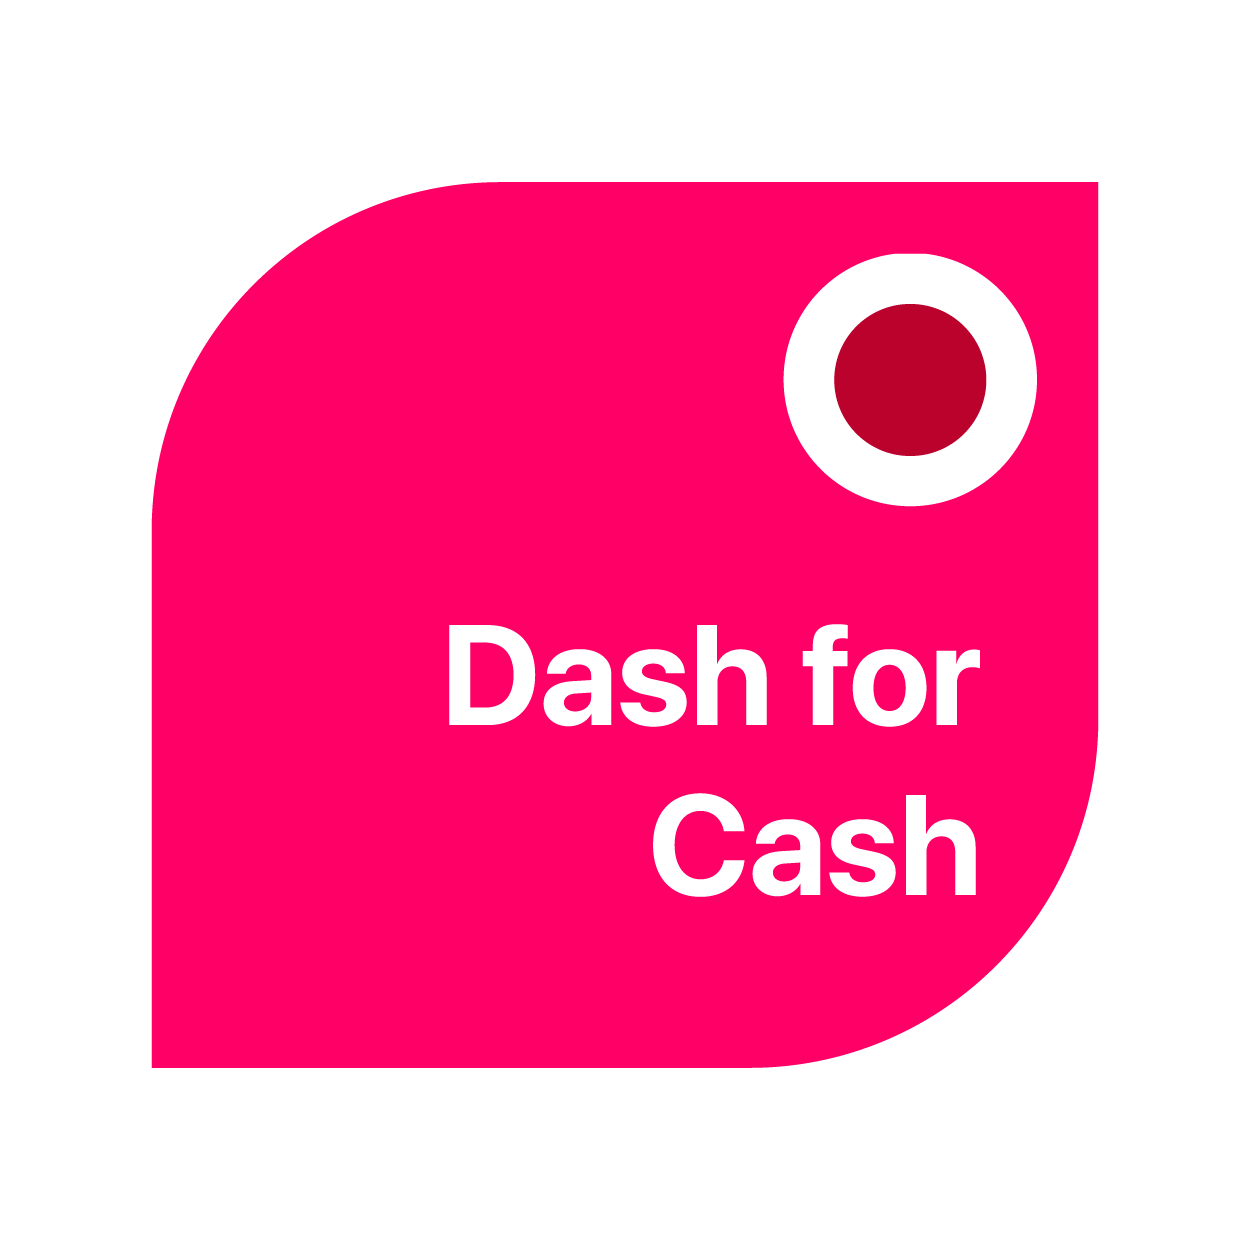 Cash_for_Dash_JP_Tavola_disegno_1.png